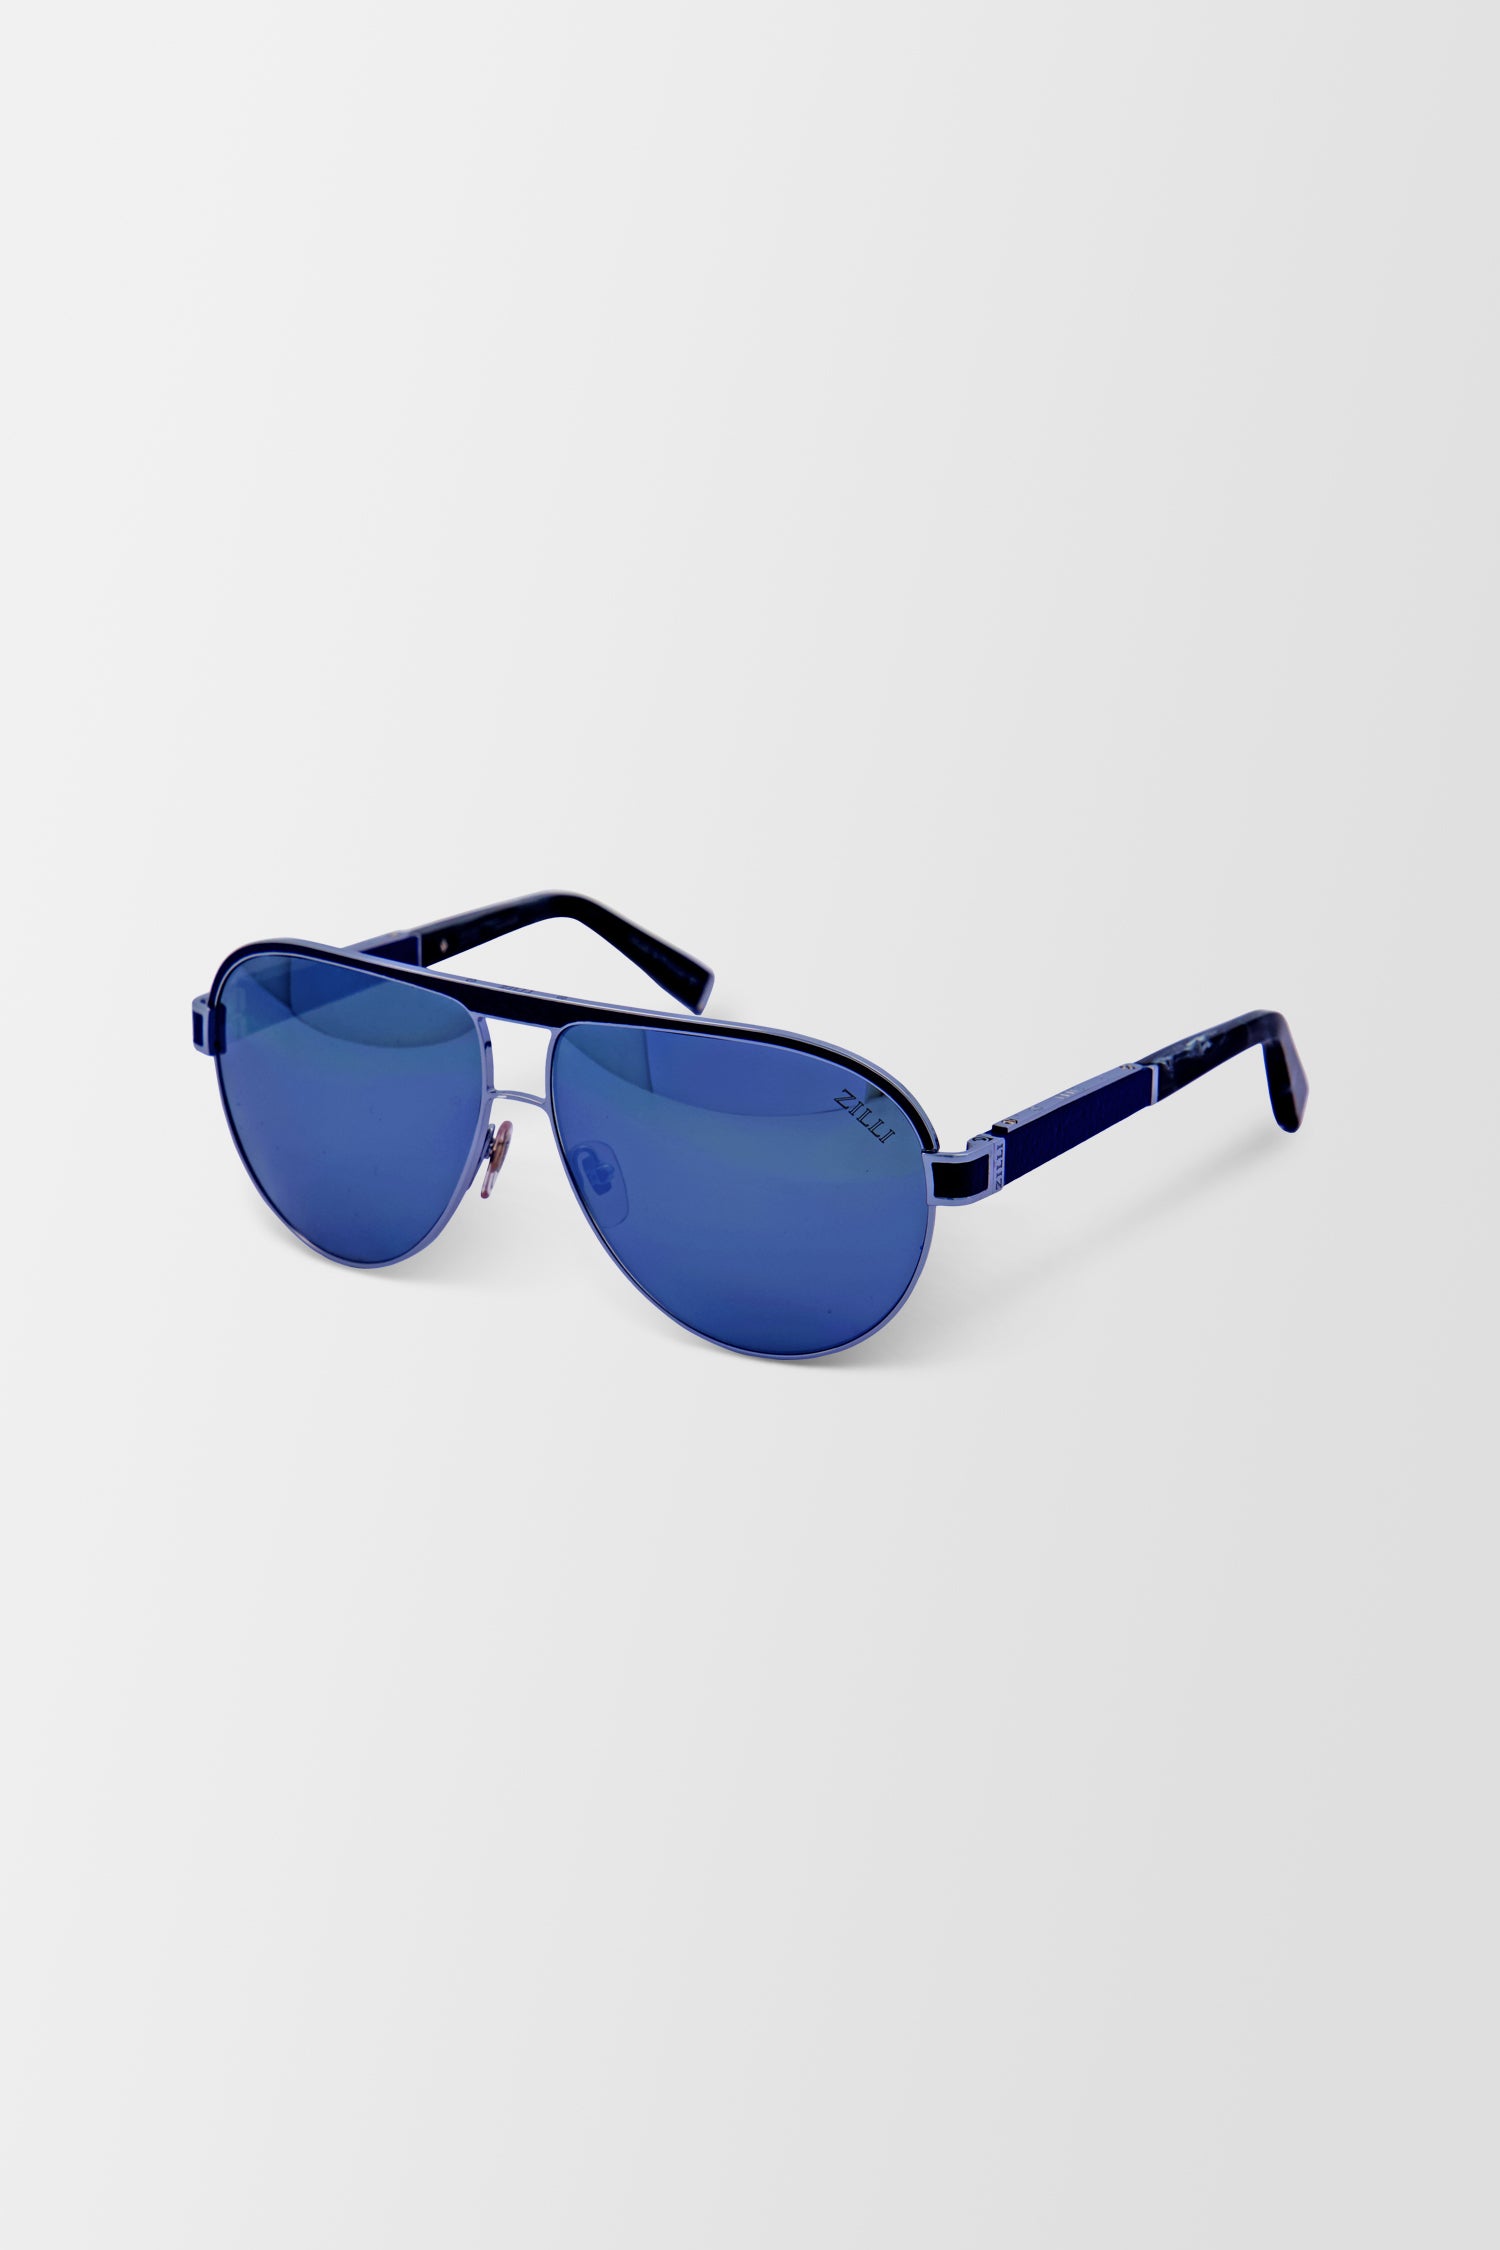 Zilli Blue Woody Sunglasses